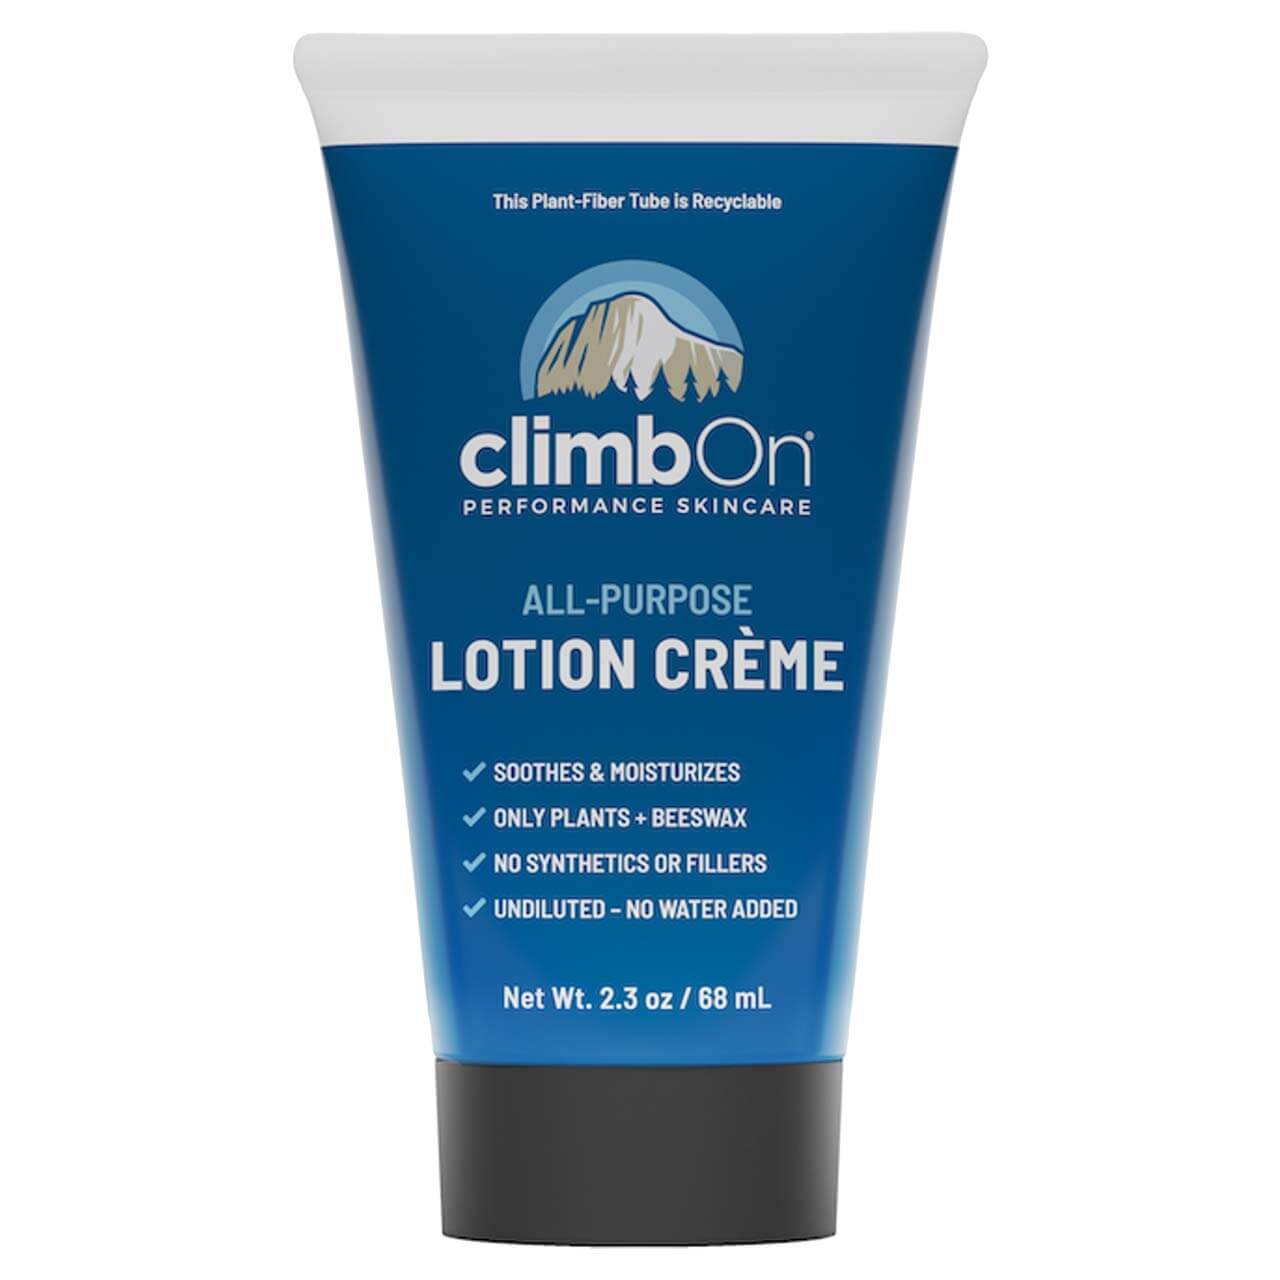 Climb On Lotion Creme - 68 ml